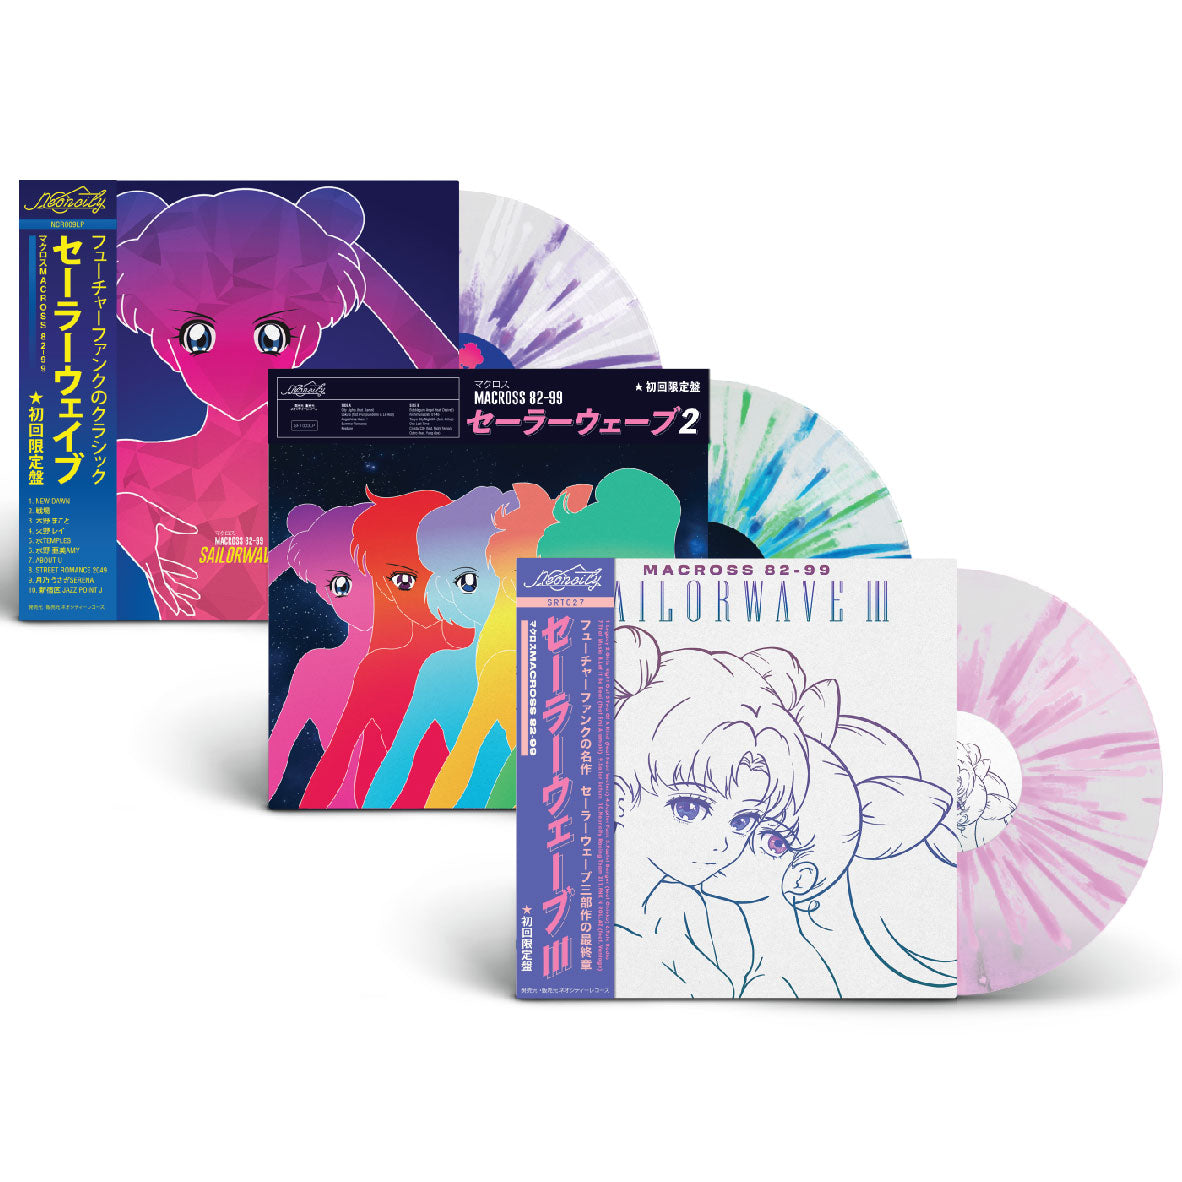 Macross 82-99 - 'Sailorwave Trilogy Collection' Vinyl Set